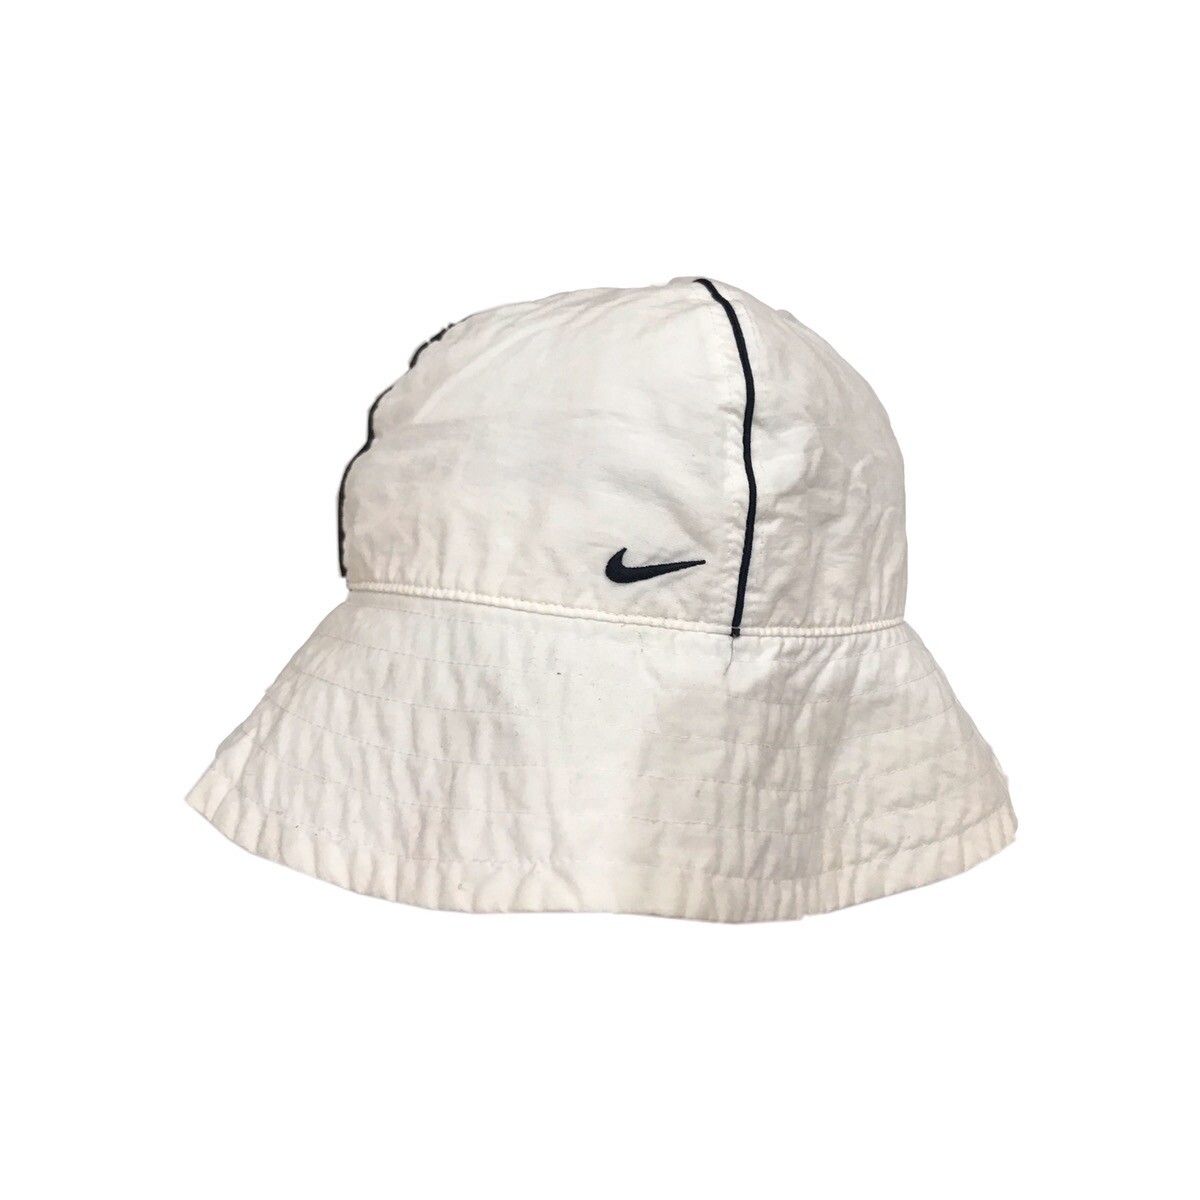 Vintage Nike bucket hat - 1